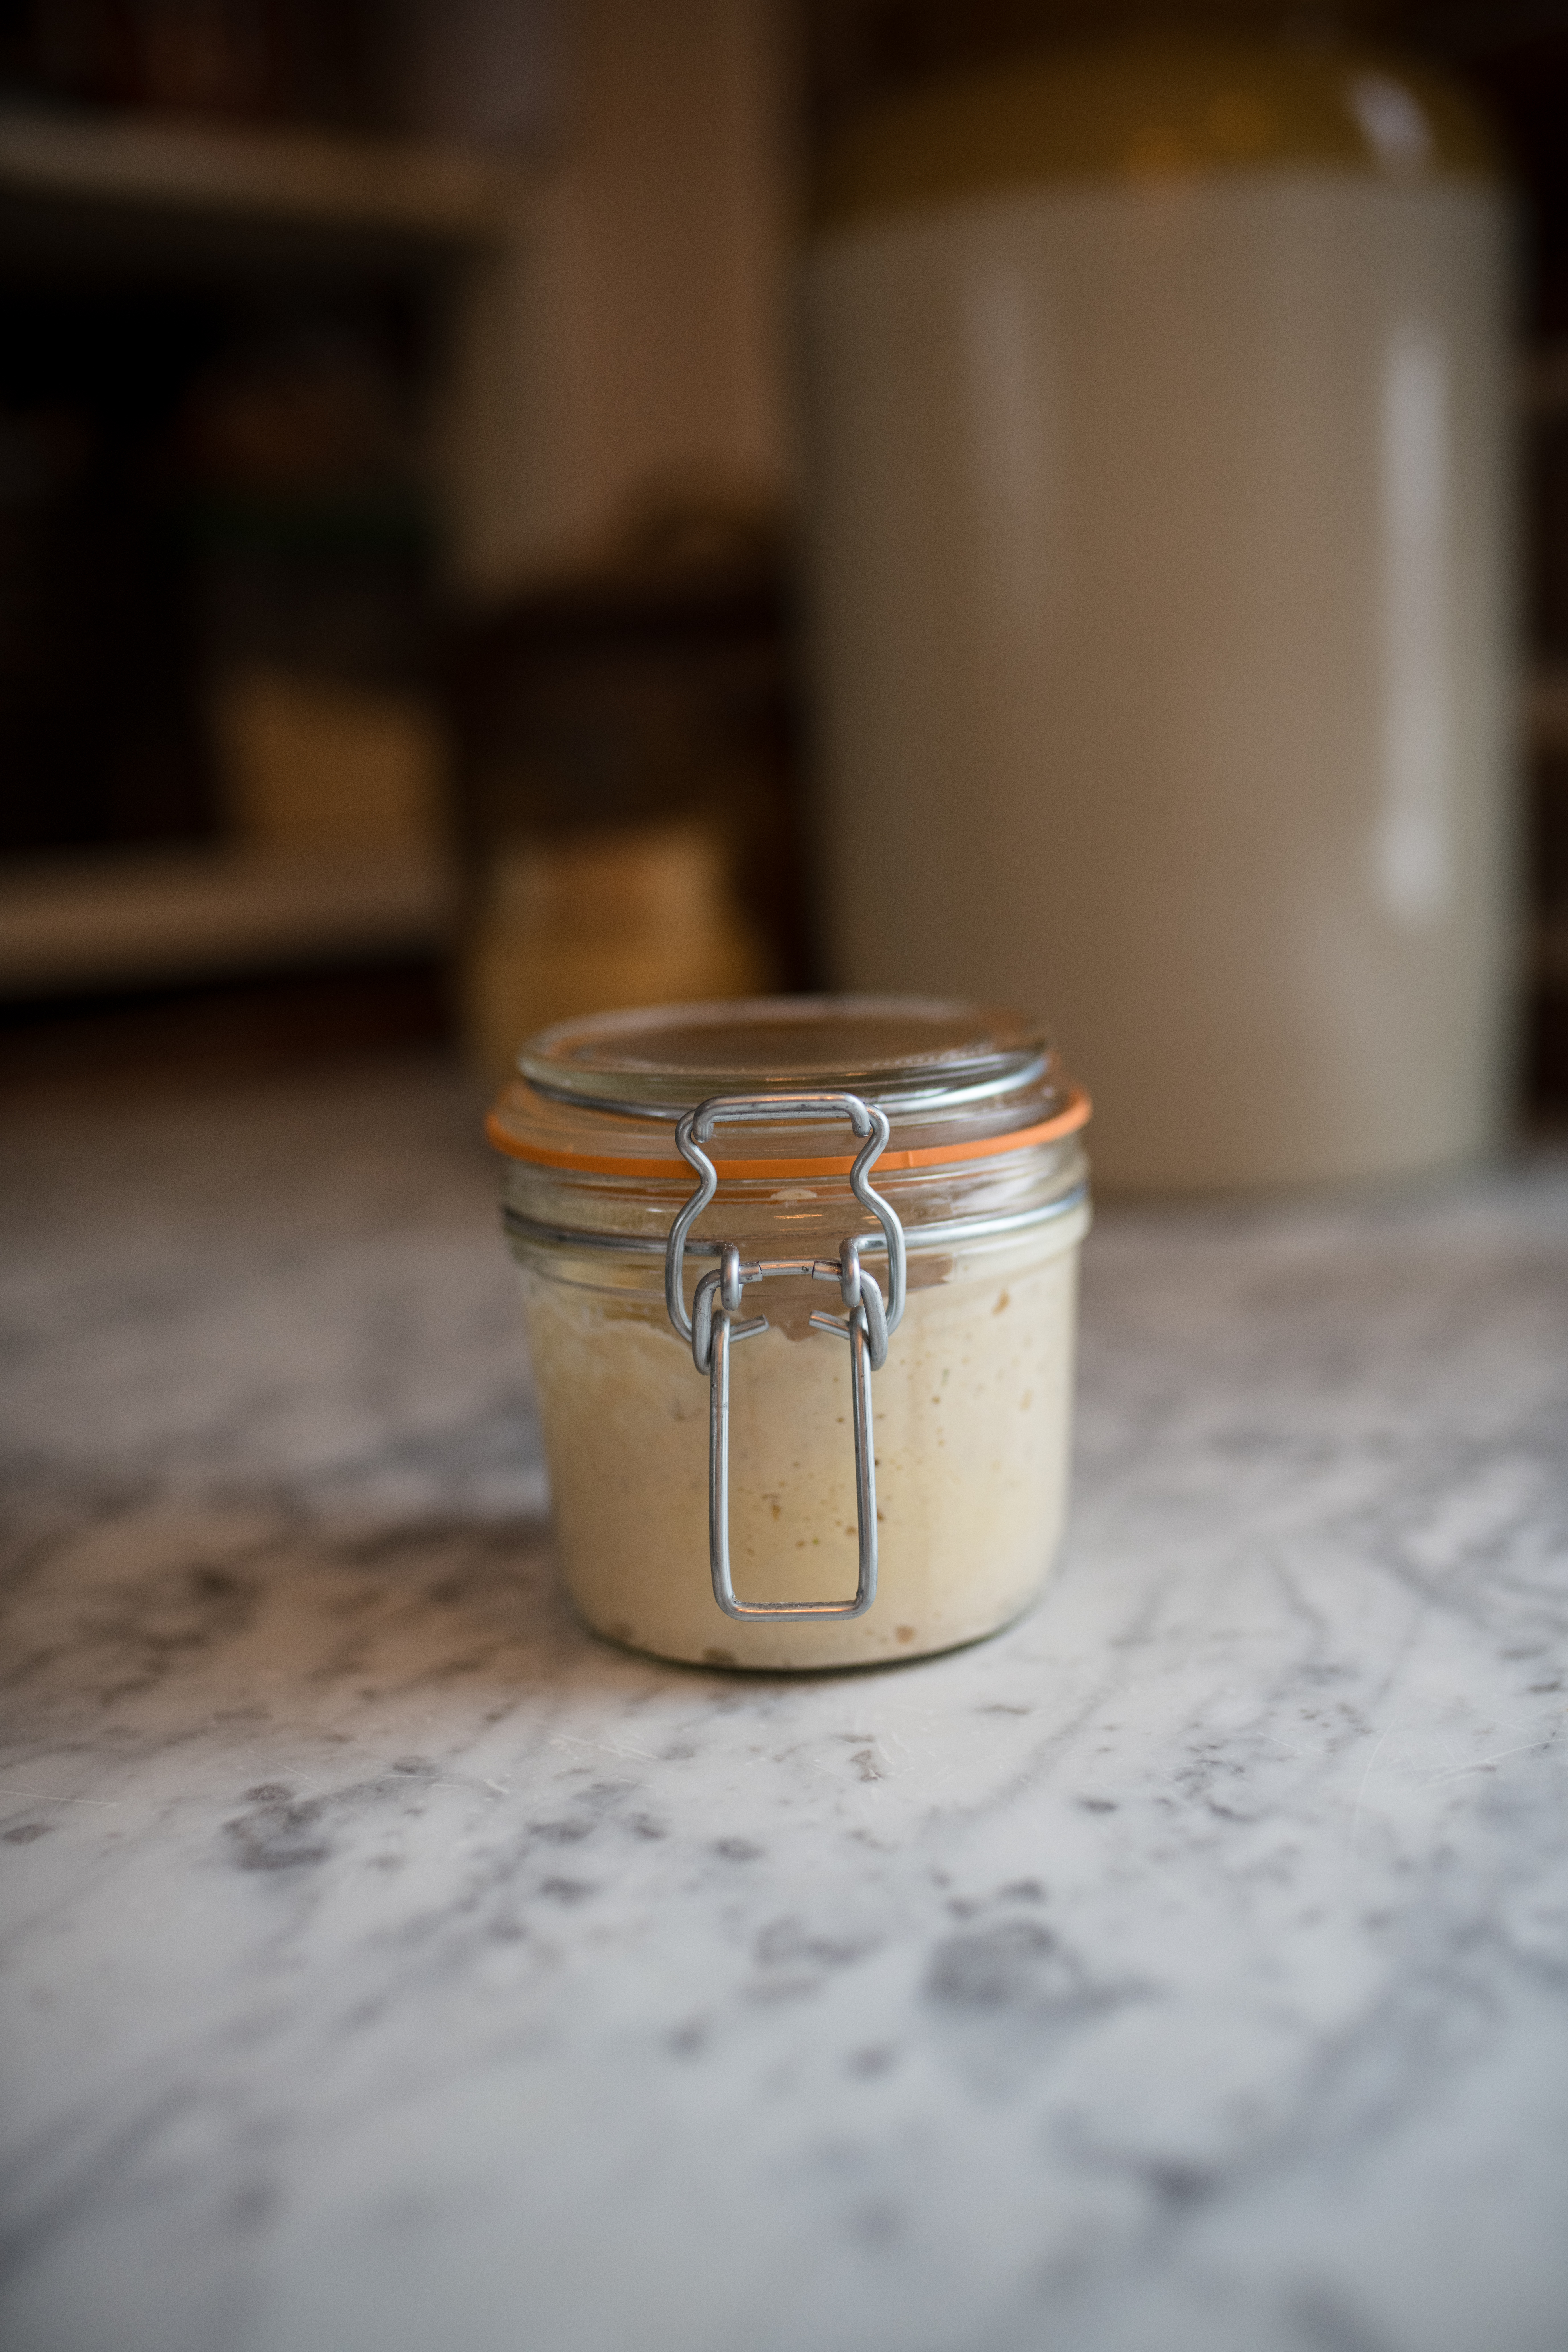 The Best Jar For Your Sourdough Starter